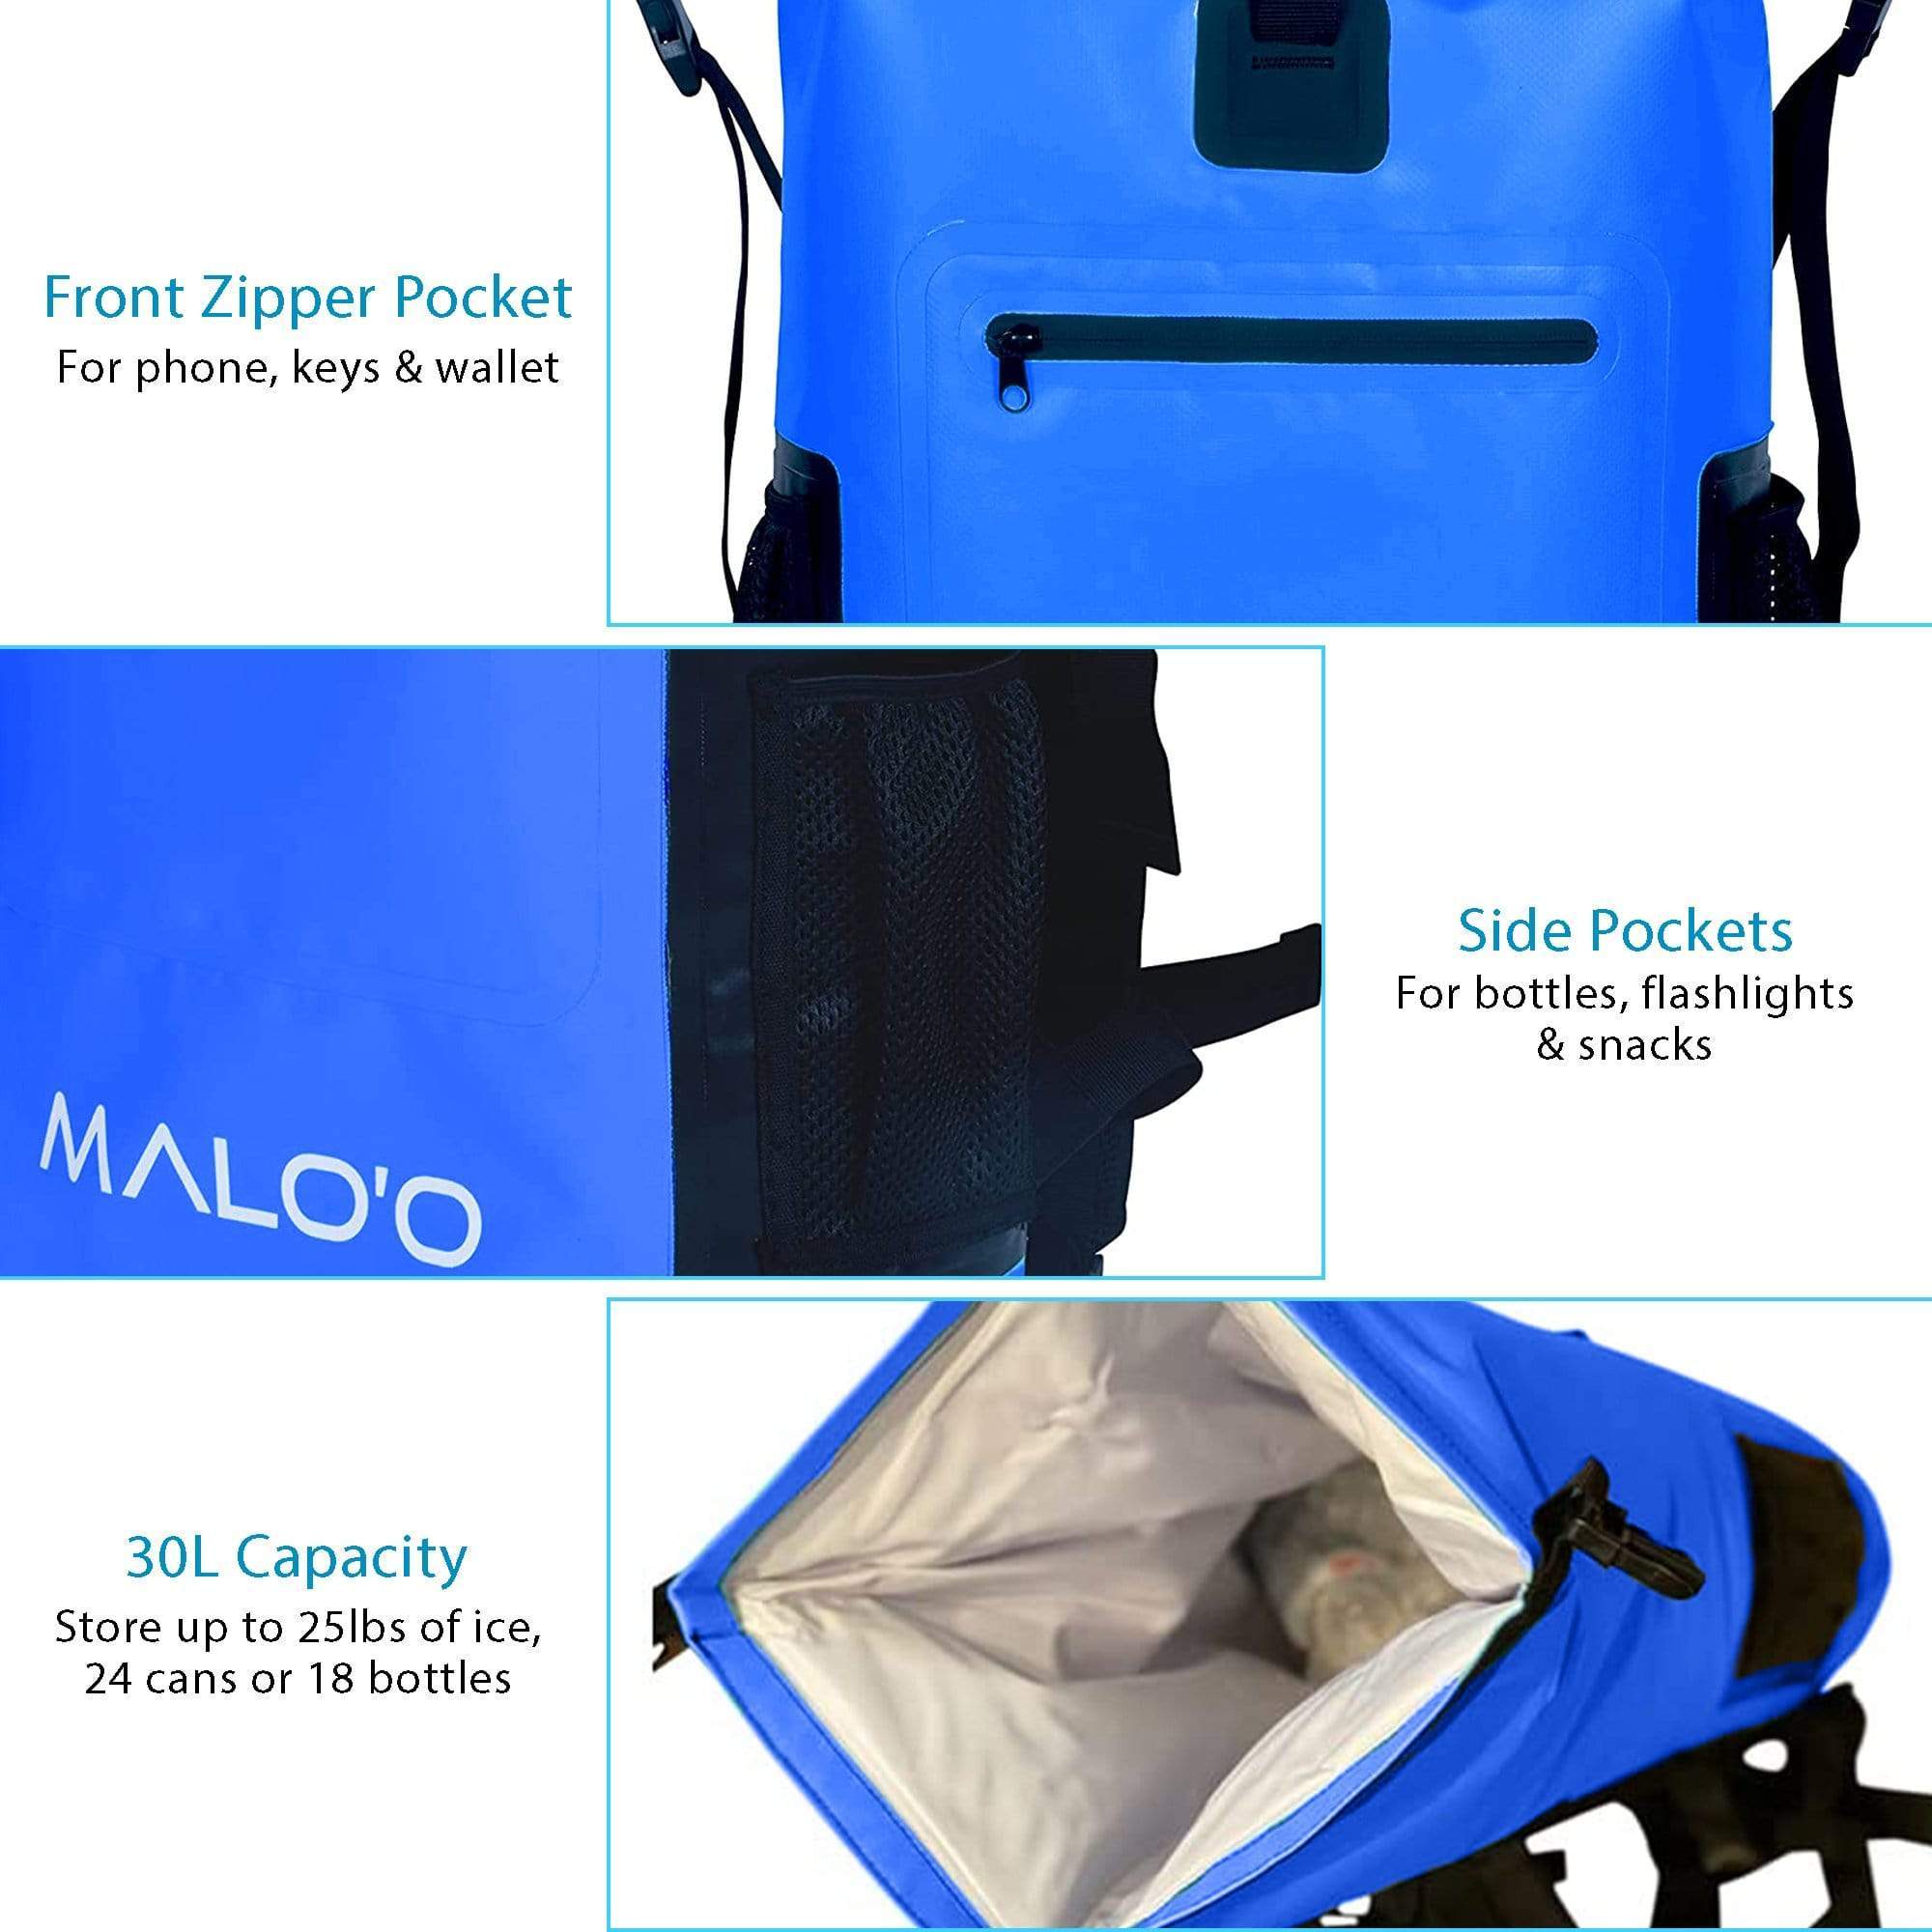 Malo&#39;o Racks Backpack Cooler Malo&#39;o Backpack Cooler